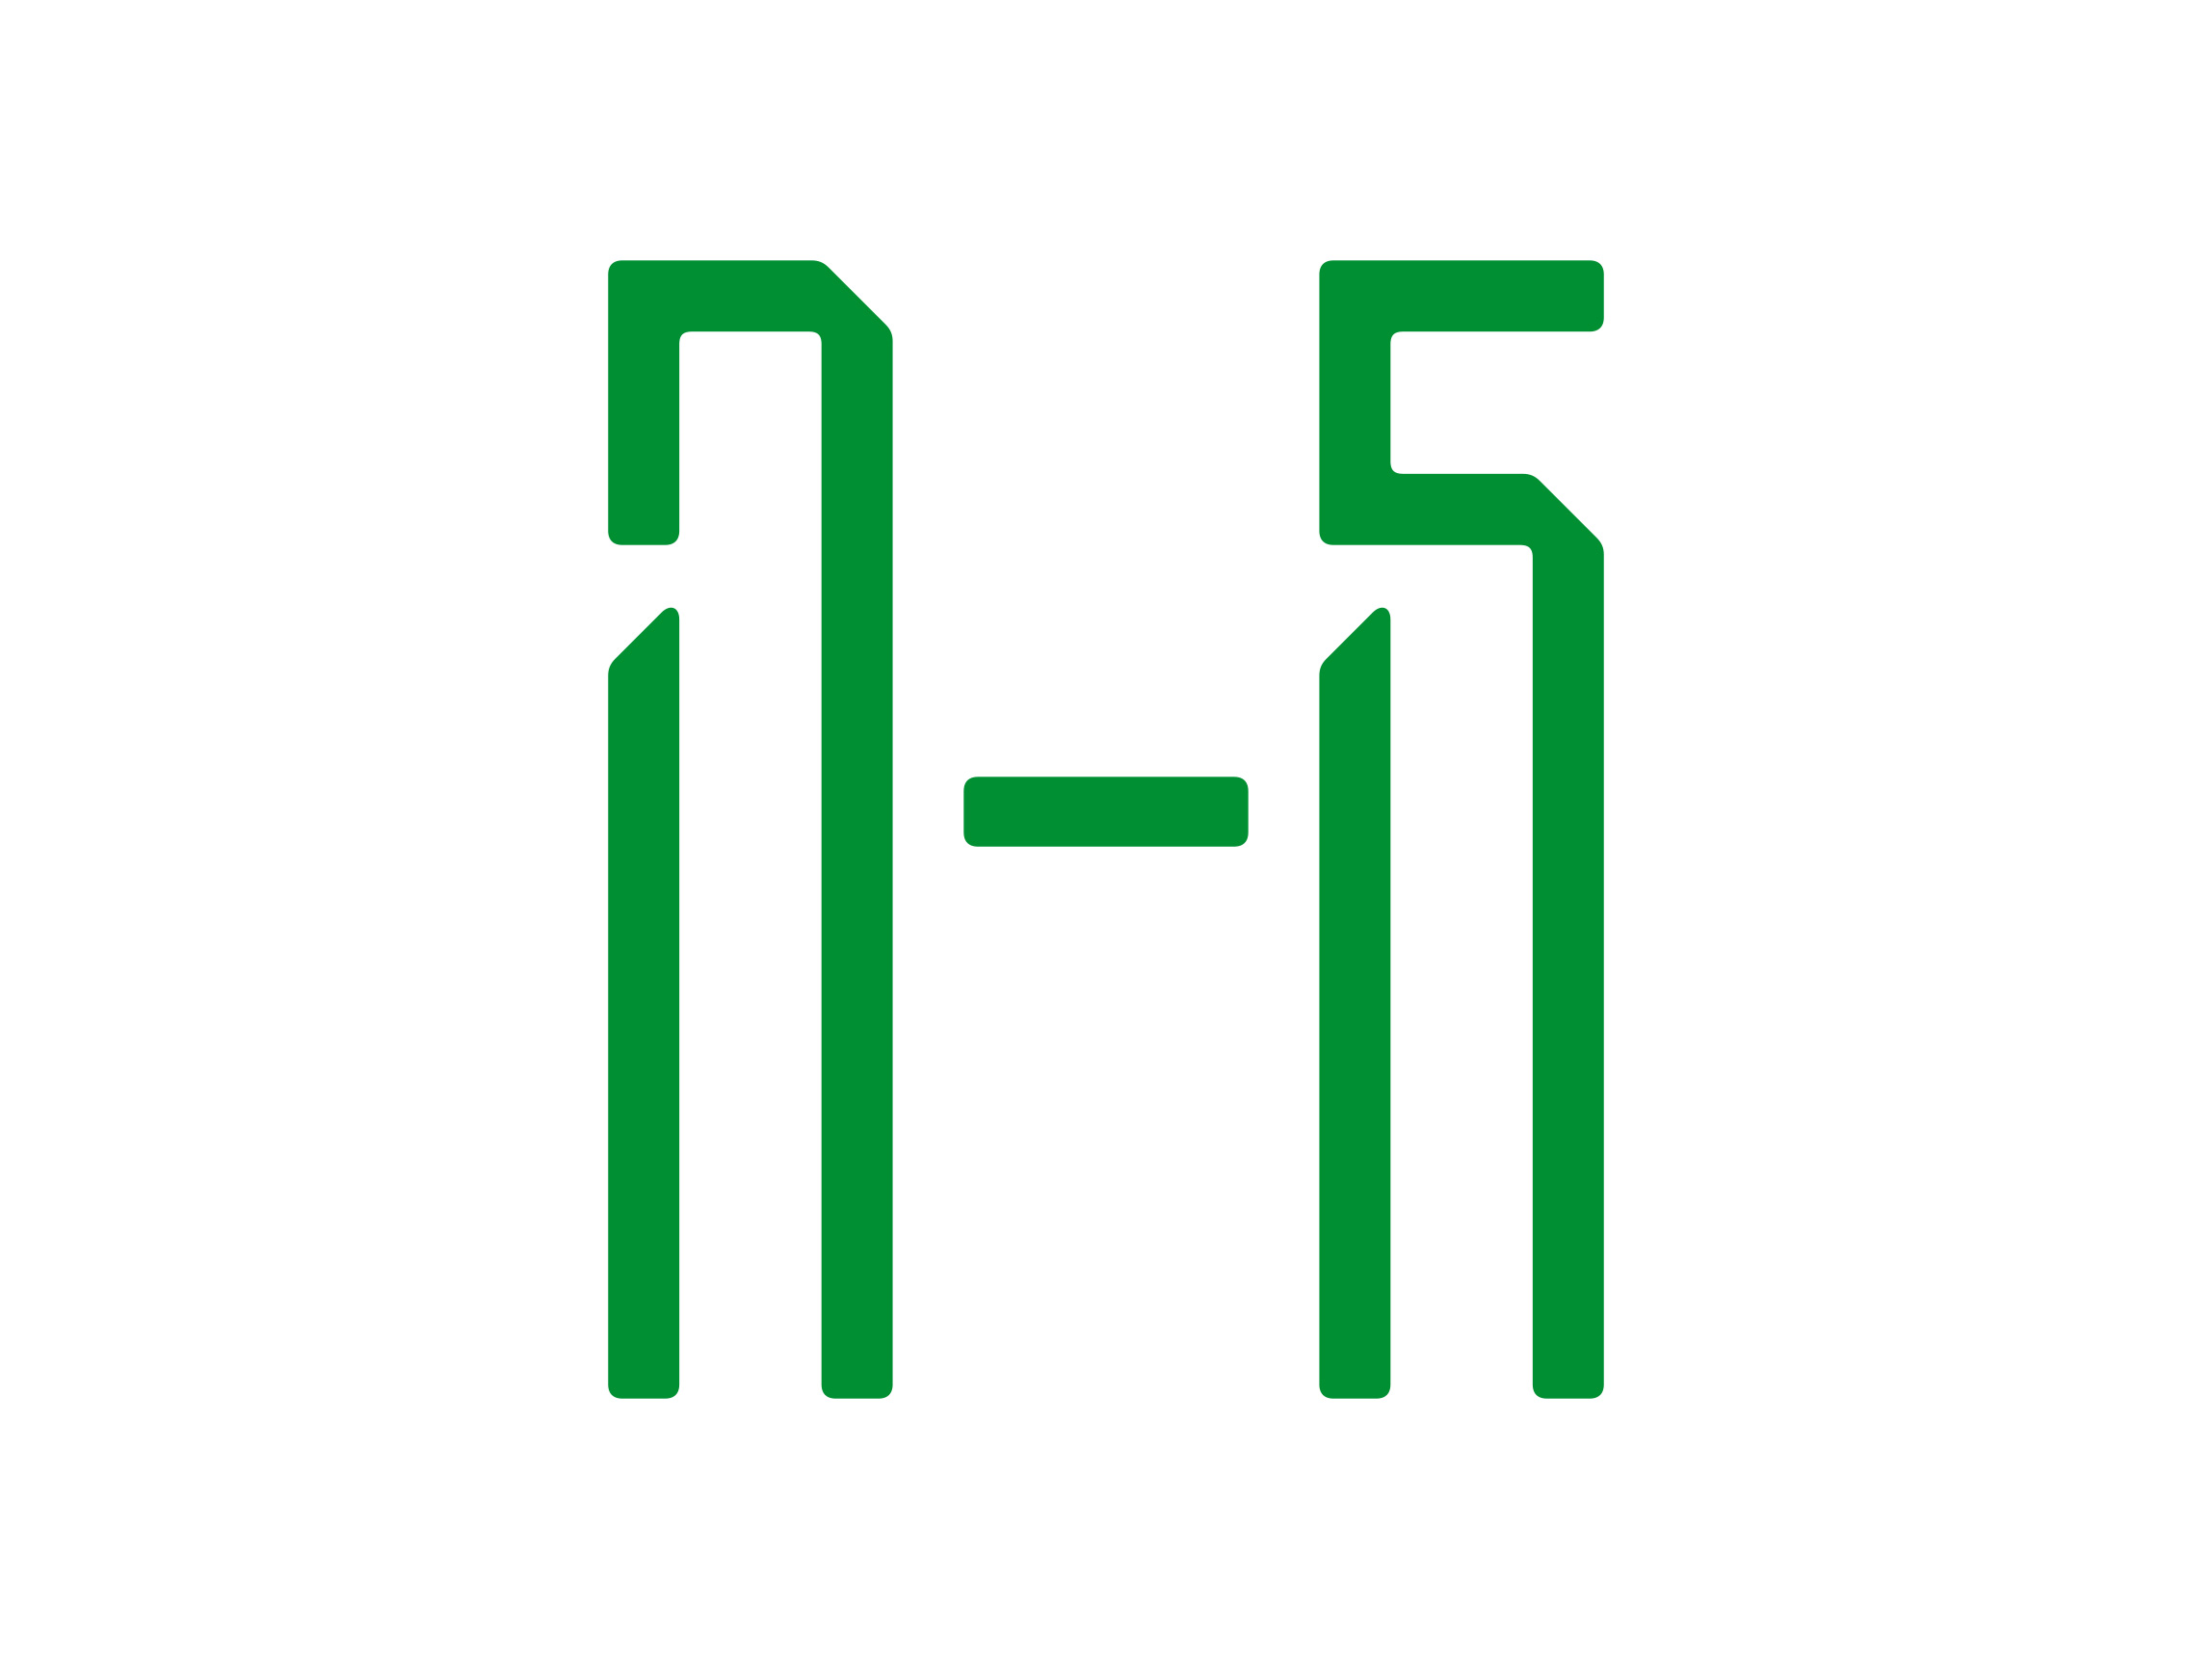 Hunters law symbol H 1715 in green